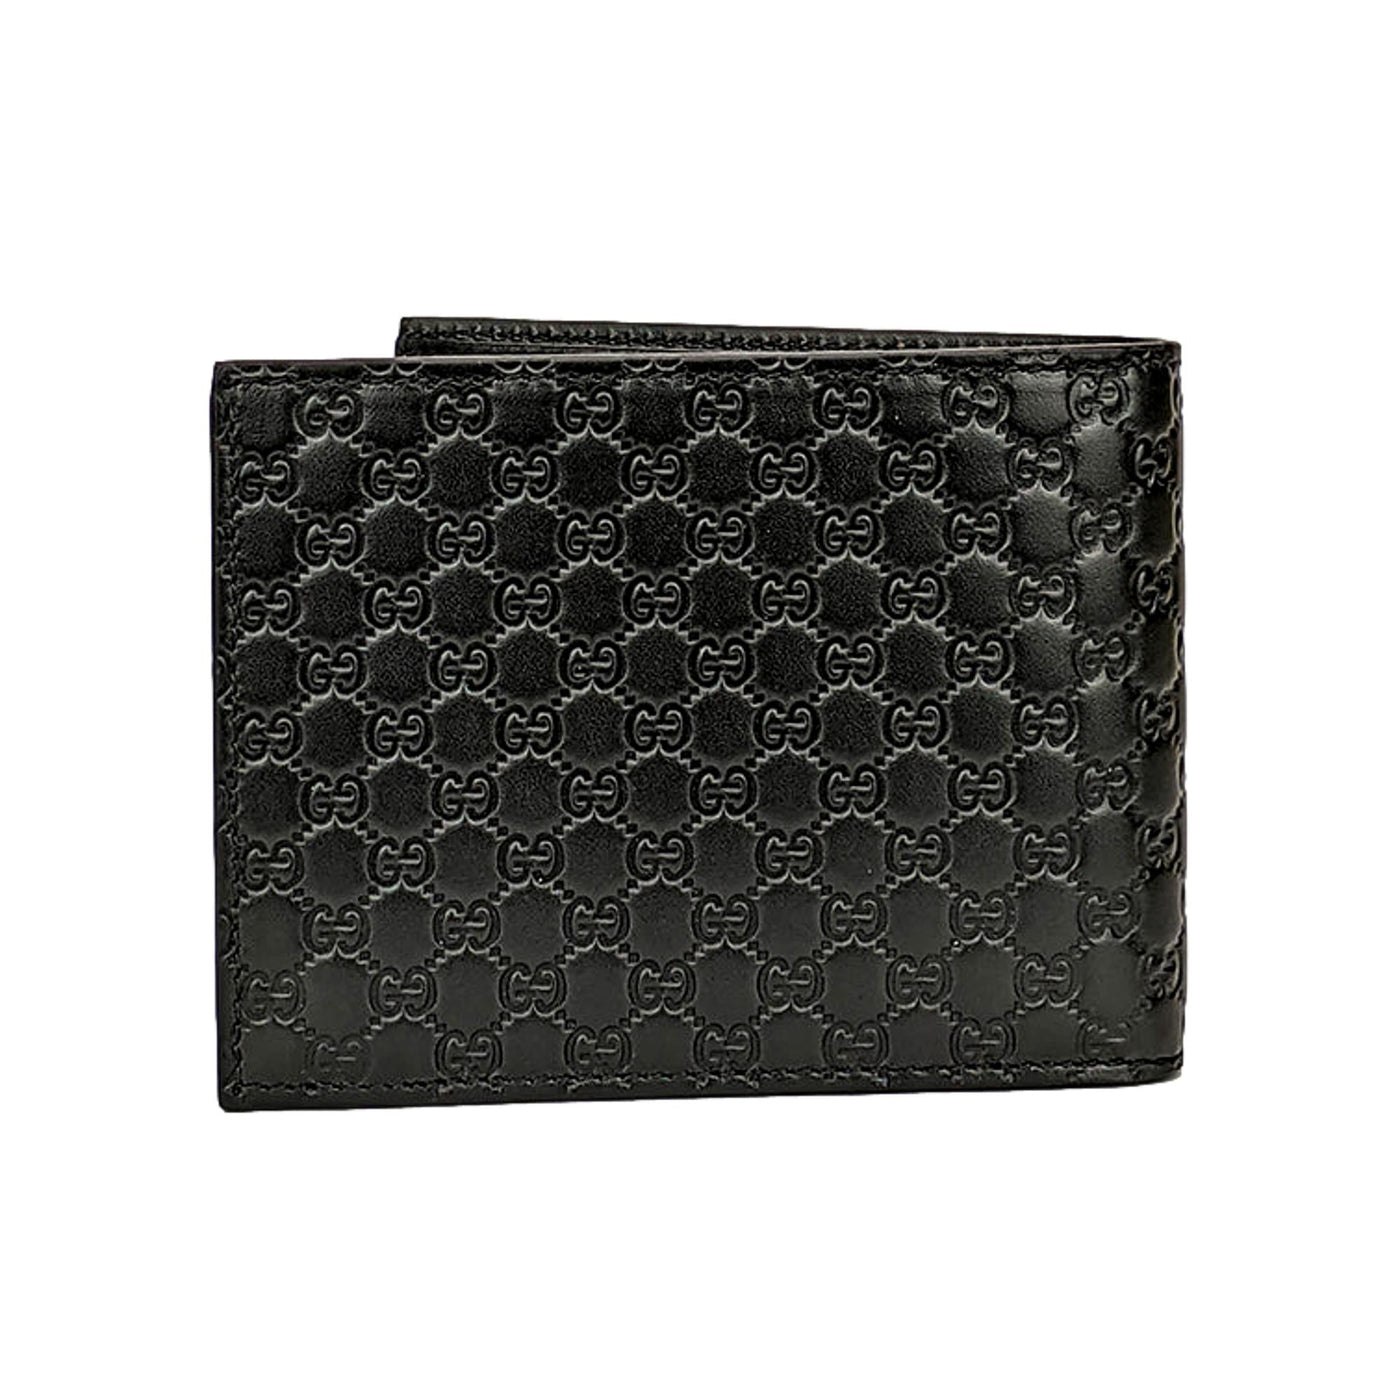 Gucci Men's Microguccissima GG Black Leather Trifold ID Wallet - LUXURYMRKT